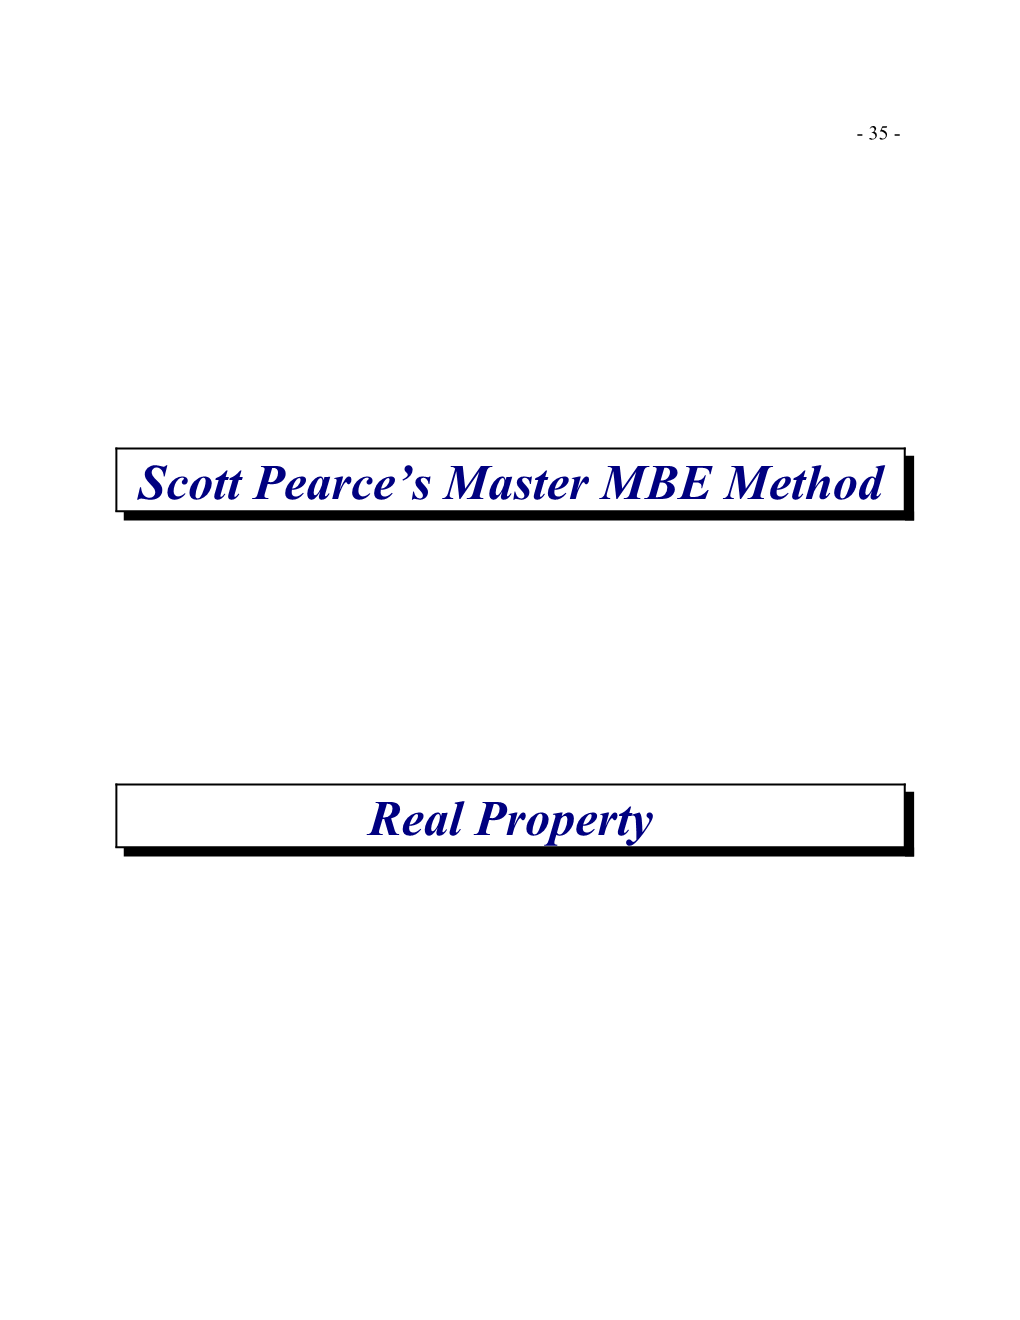 Scott Pearce's Master MBE Method Real Property